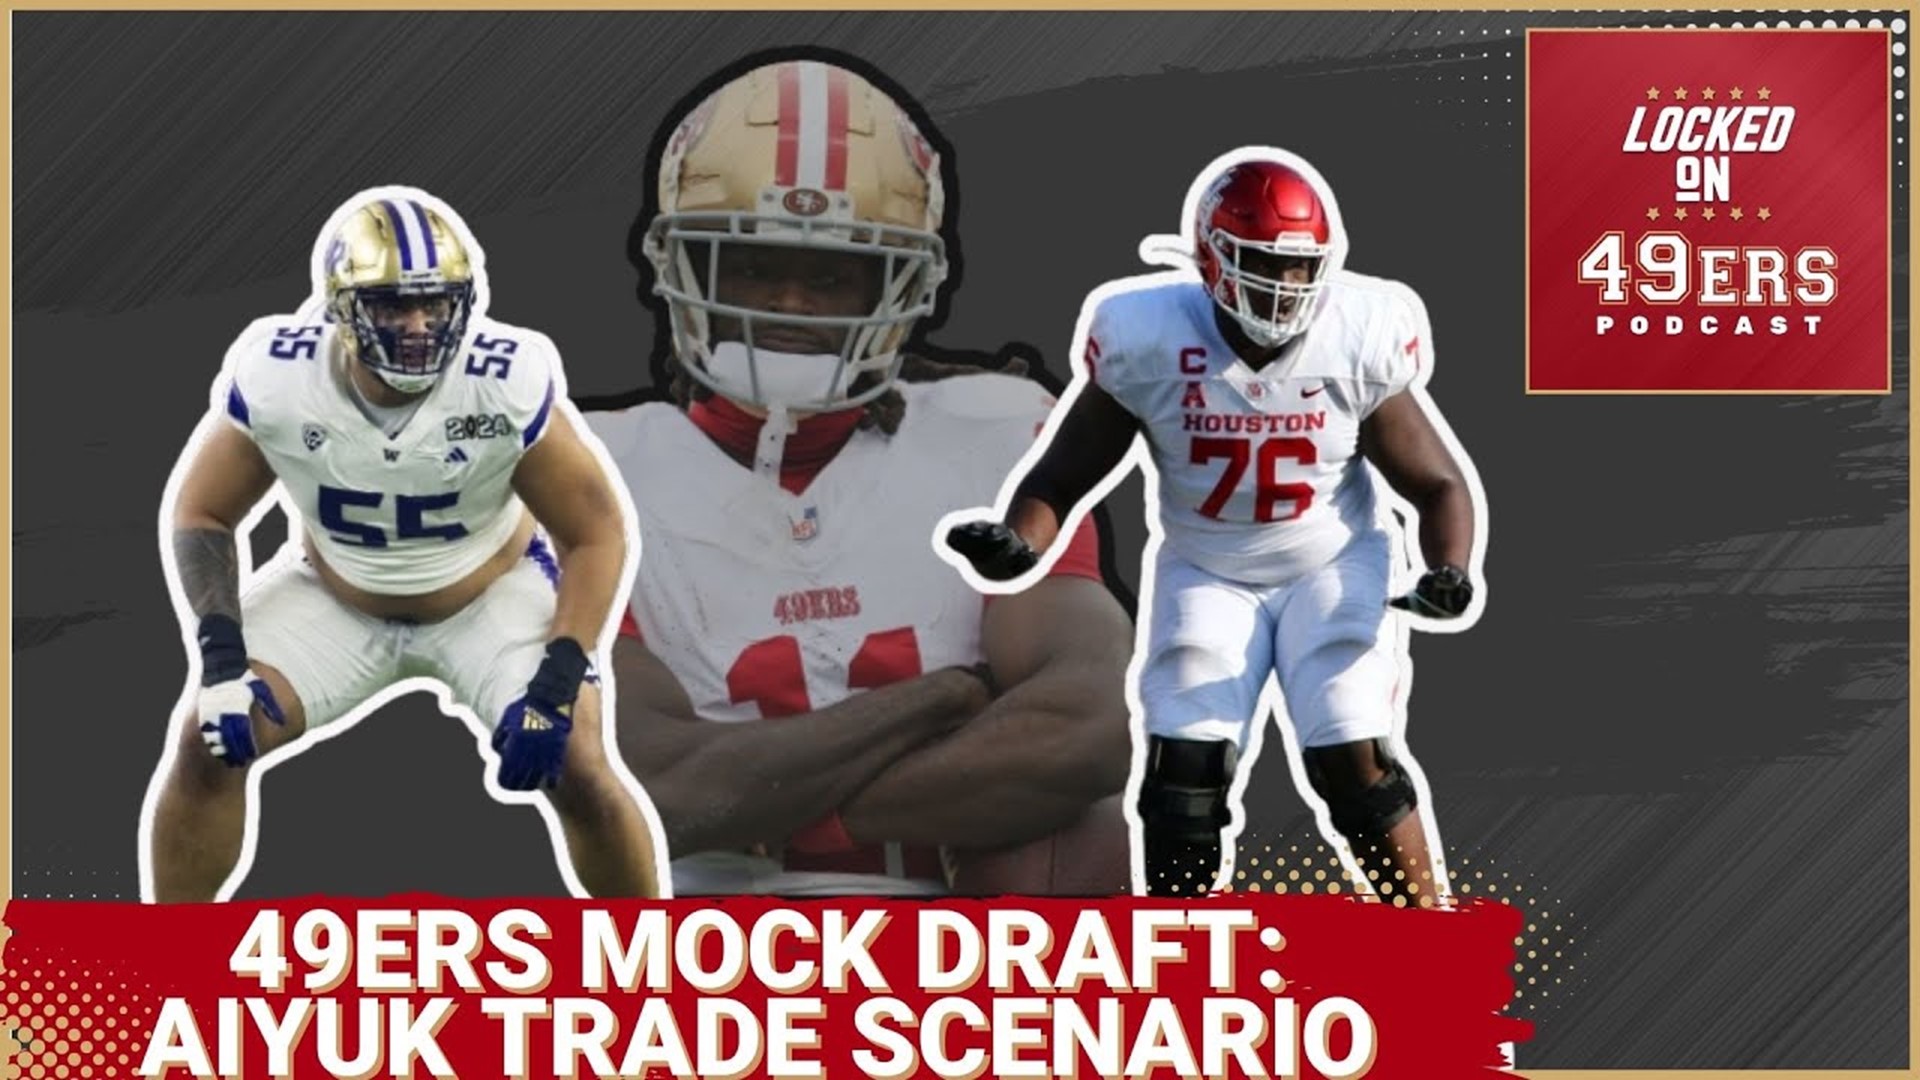 Brandon Aiyuk trade scenario in the 2024 NFL Draft. Making Picks through 4 rounds with trades.